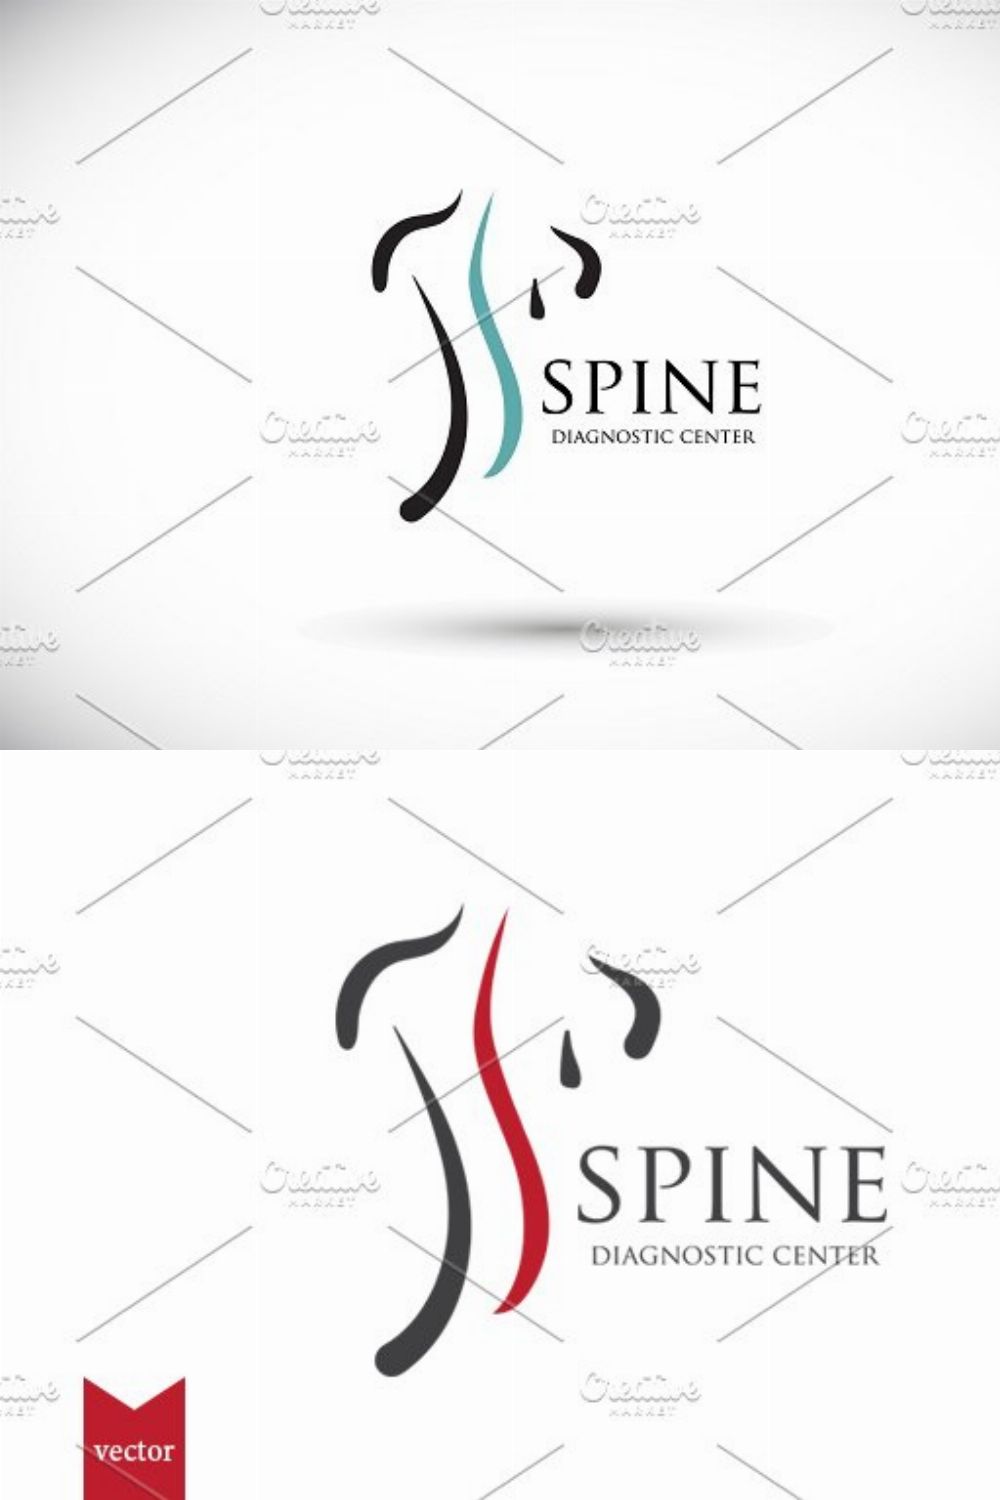 Spine Diagnostic Center logo pinterest preview image.